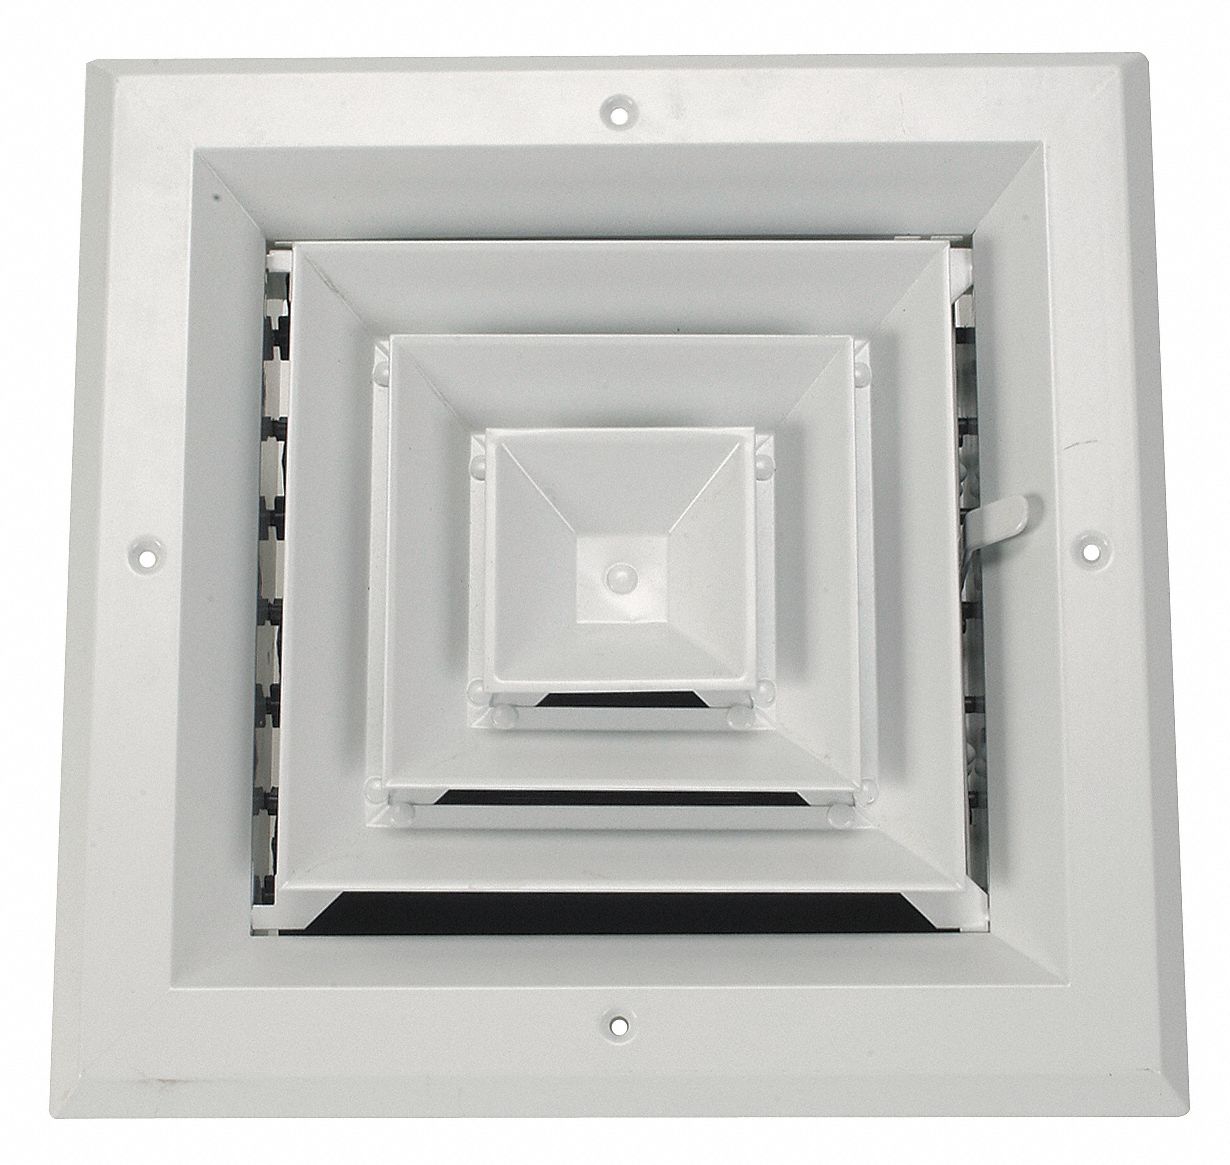 Ceiling Diffuser: Aluminum, 4-Way Multilouver, White, Enamel, Square